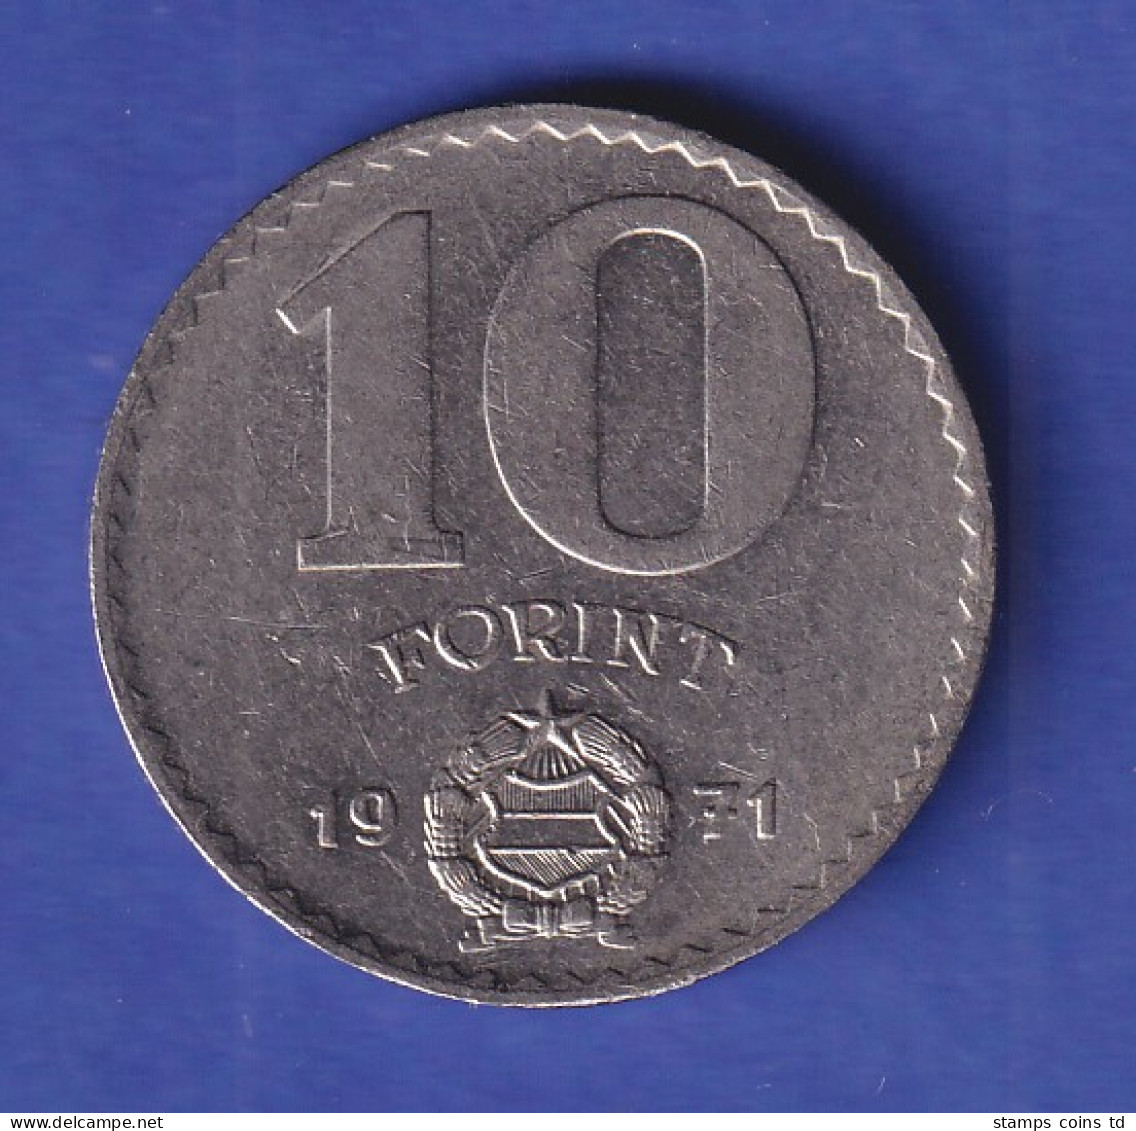 Ungarn Kursmünze 10 Forint 1971 - Hongrie